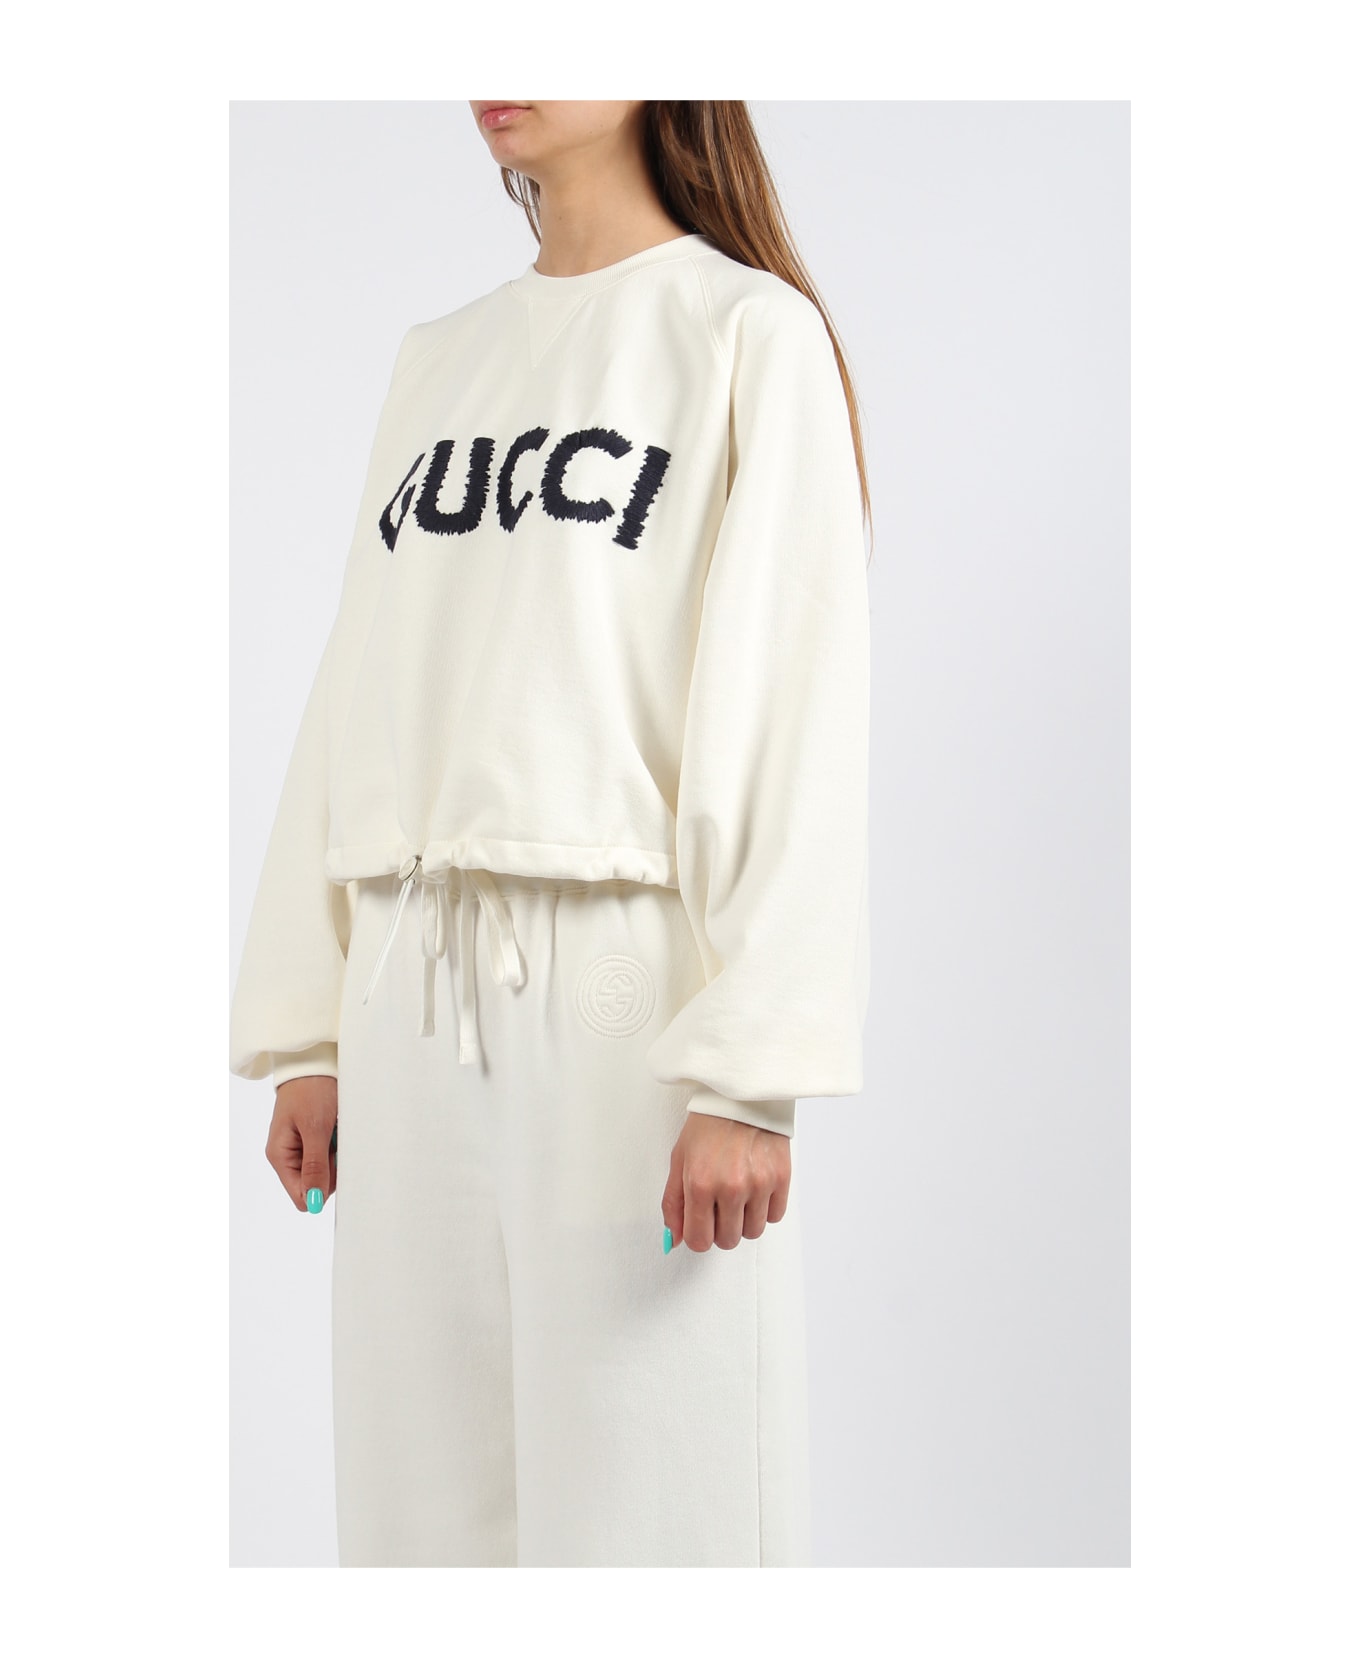 Gucci Cotton Jersey Drawstring Sweatshirt - White